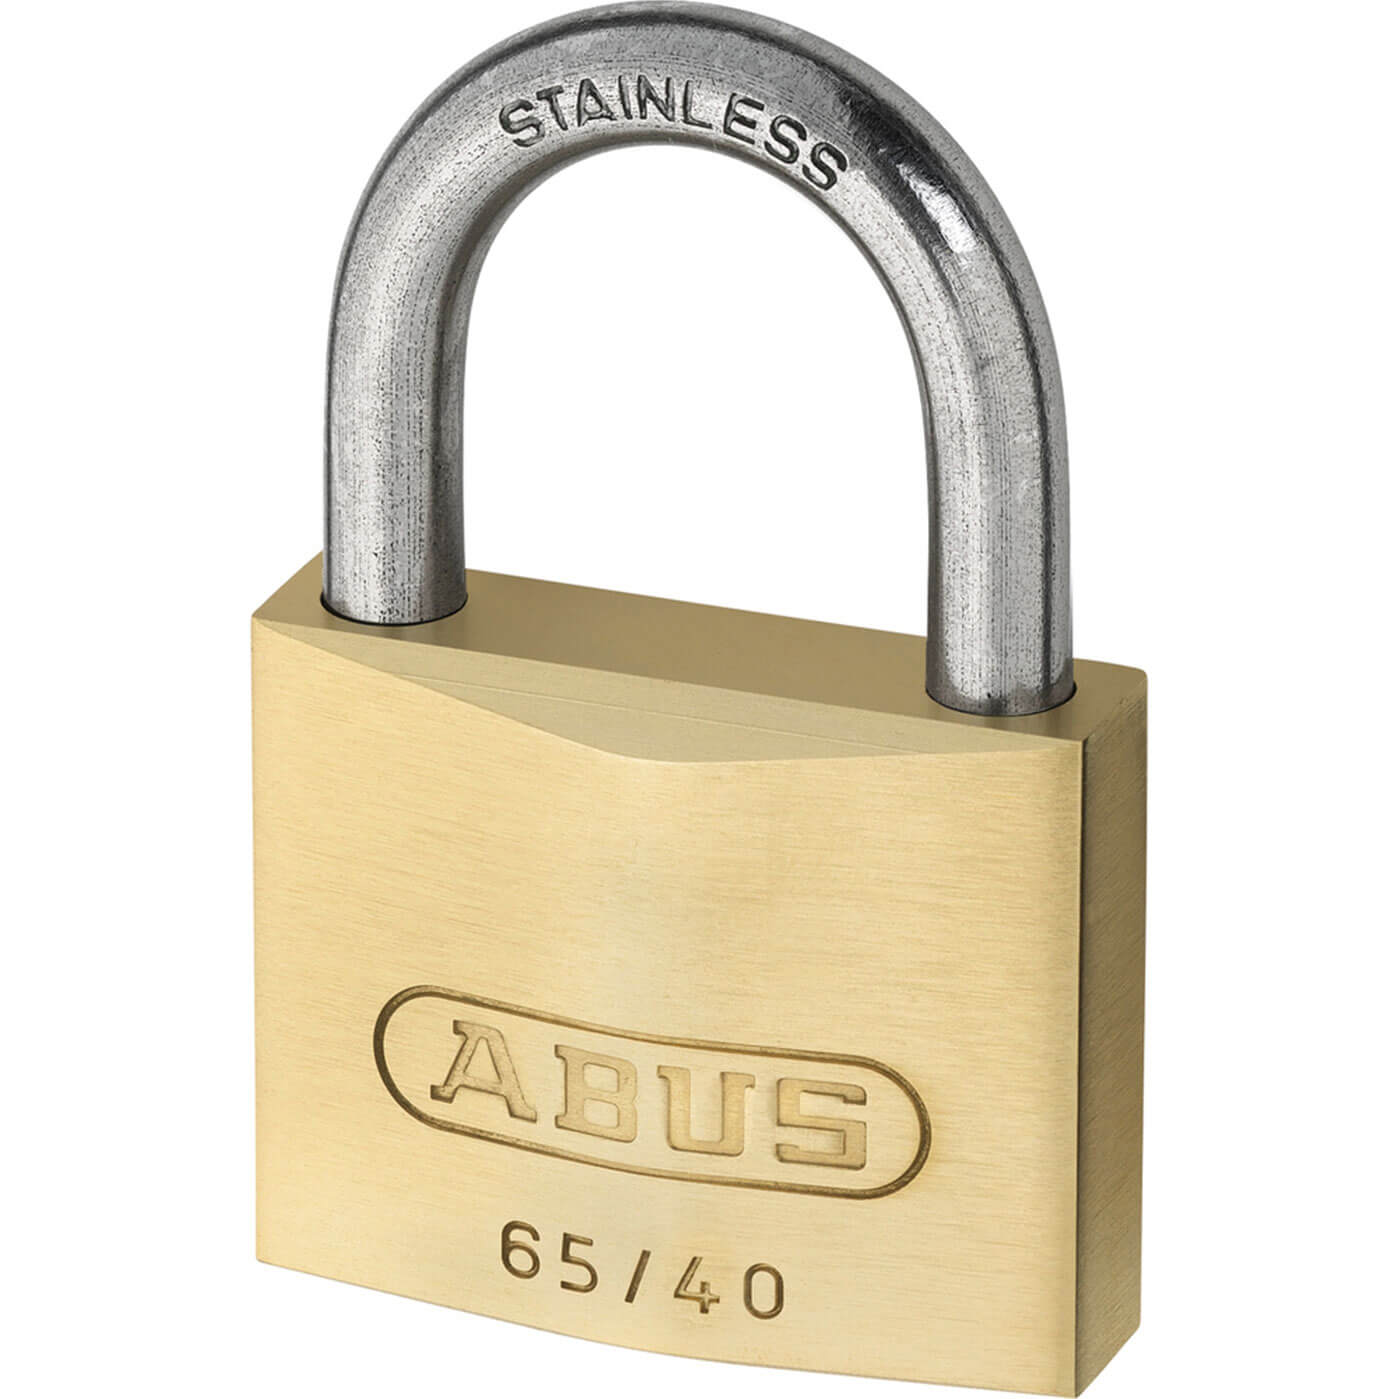 Image of Abus 65 Series Compact Brass Padlock Keyed Alike 30mm Standard 6304